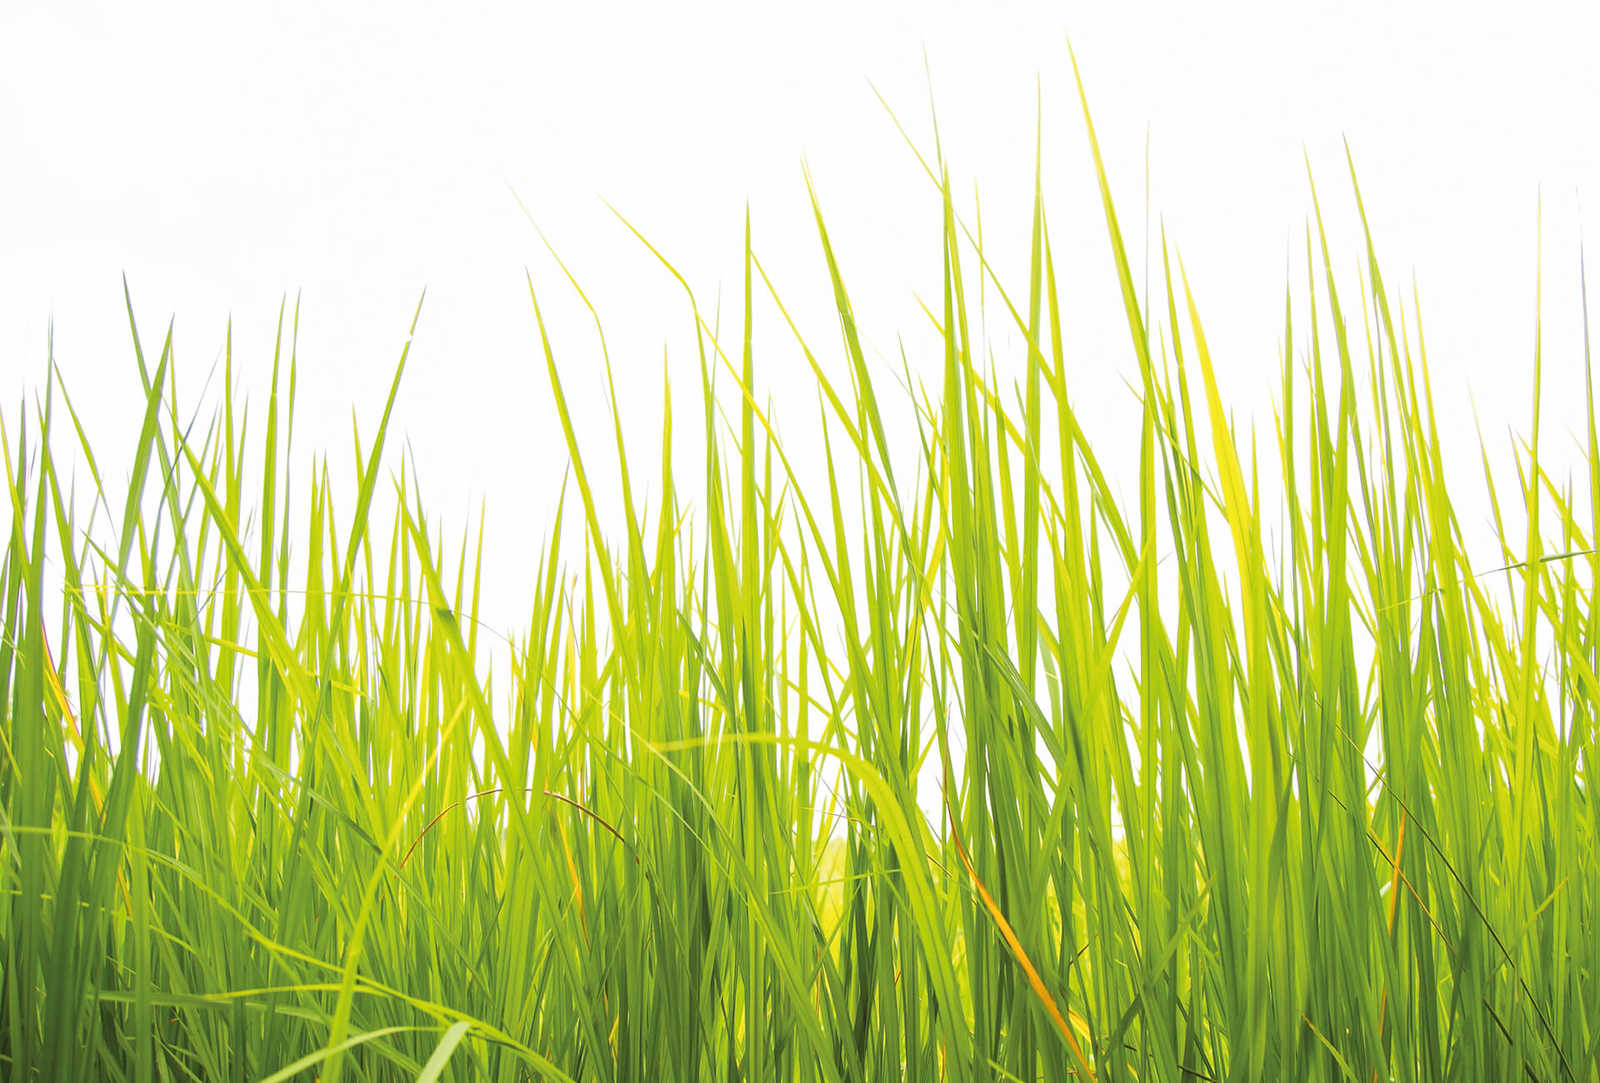         Fototapete hohes Gras im Wind – Grün
    